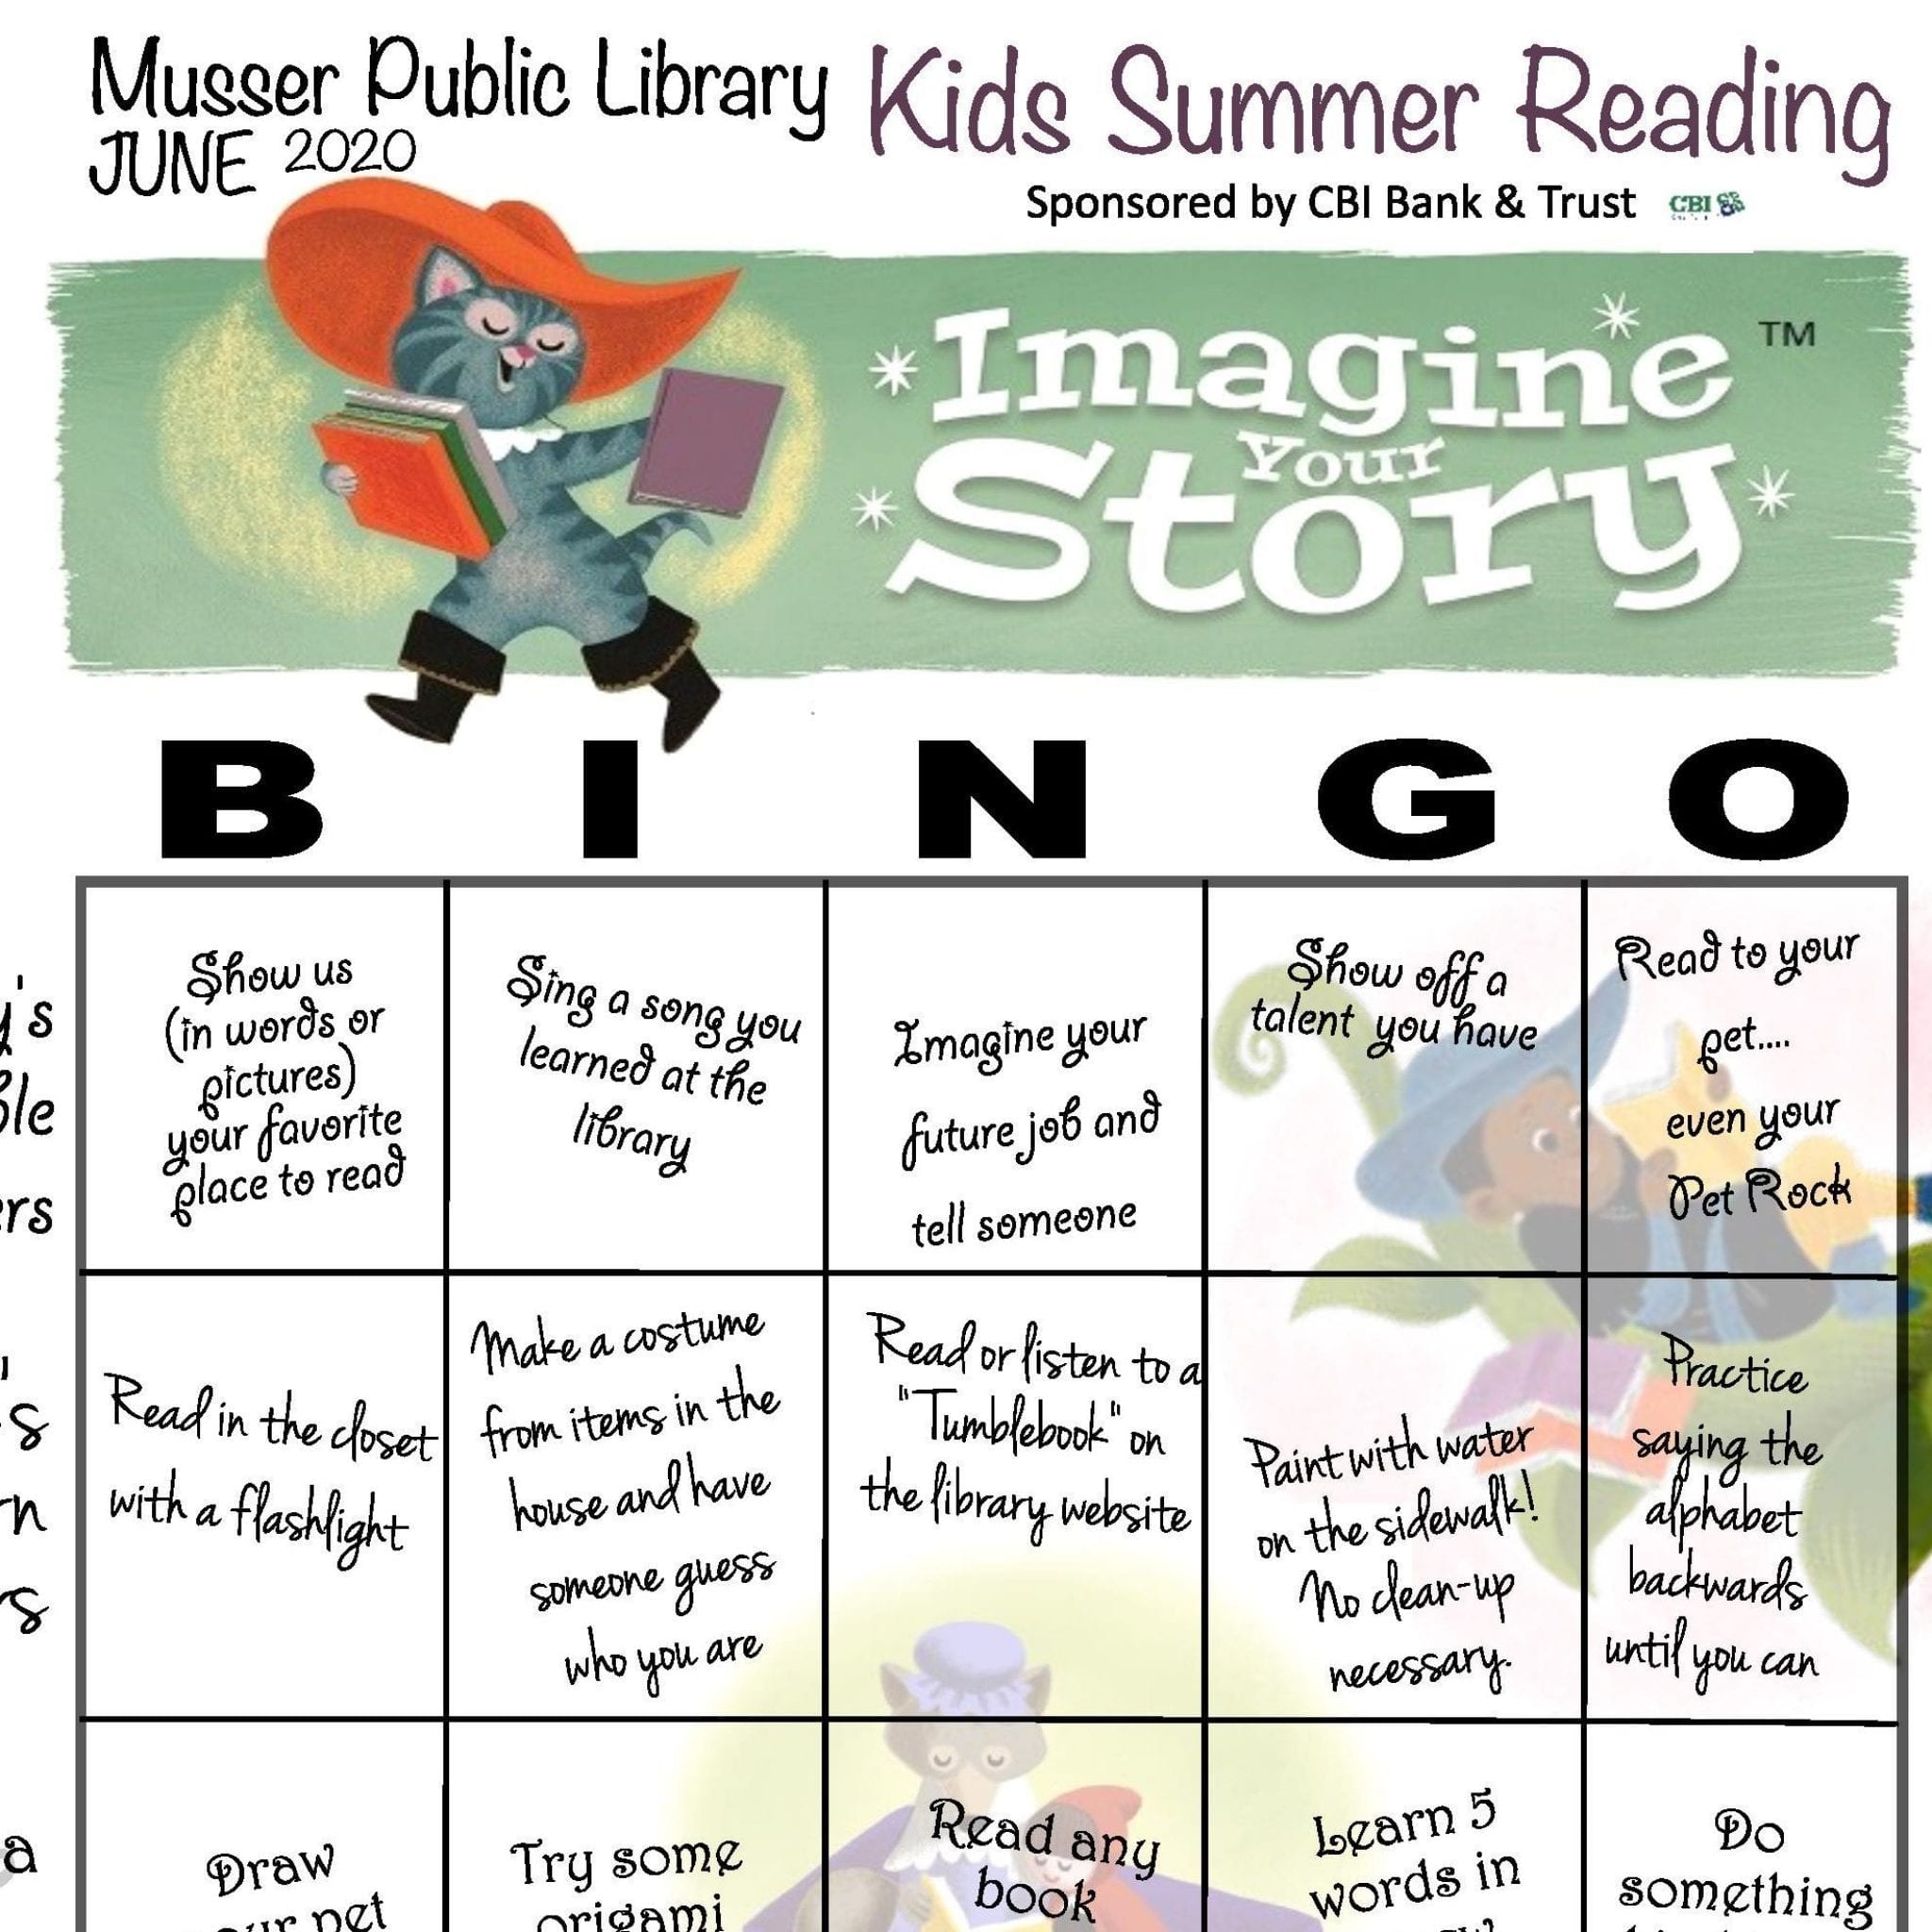 Summer reading program underway at Musser Public Library